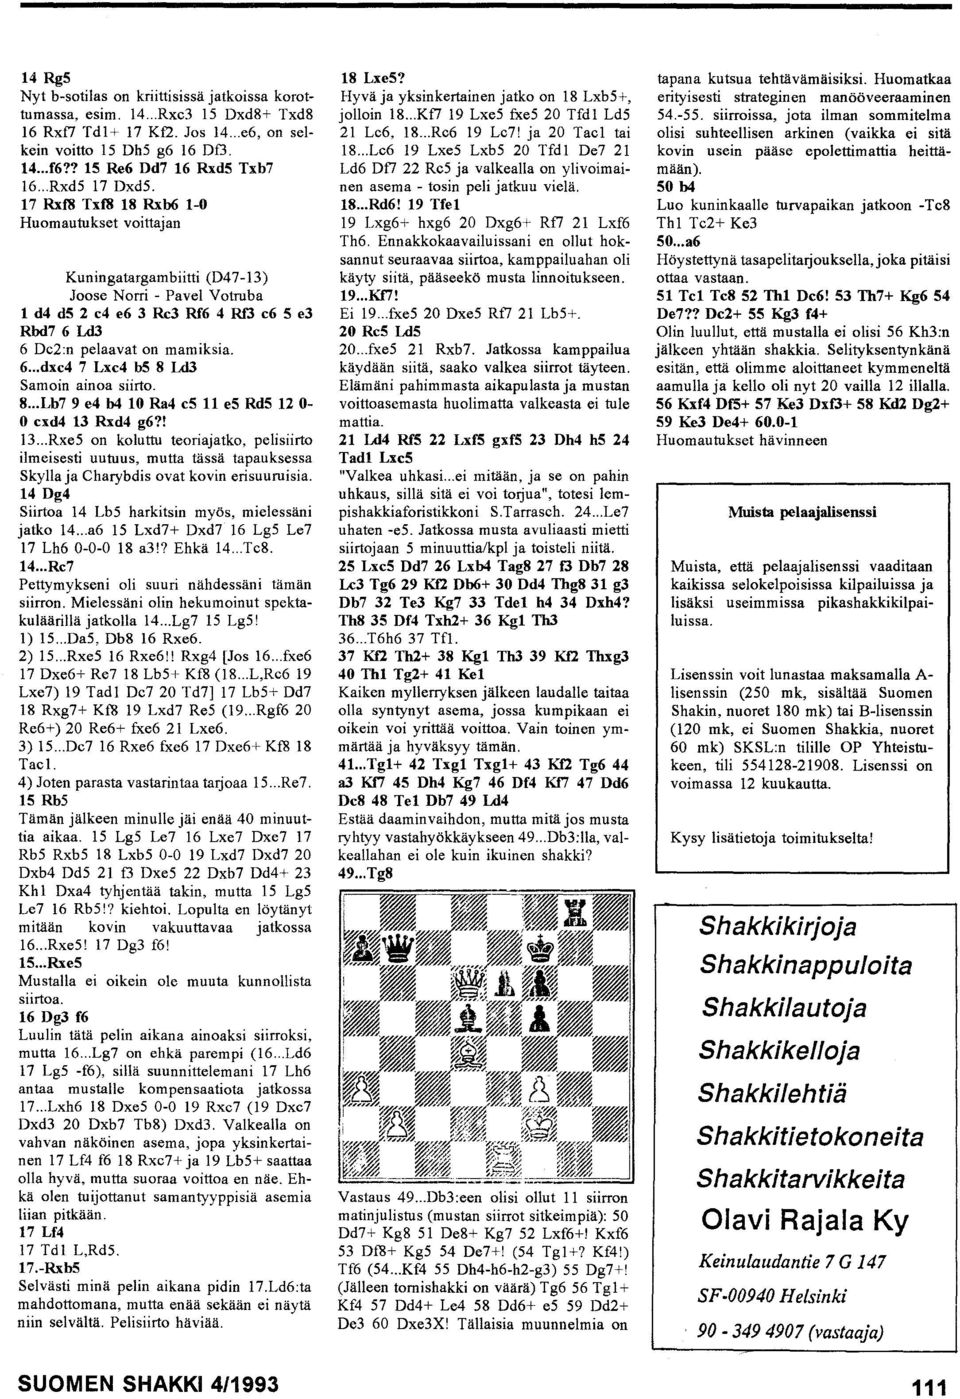 17 RxfS TxfS 18 Rxb6 1-0 Huomautukset voittajan Kuningatargambiitti (D47-13) Joose Norri - Pavel Votruba 1 d4 d5 2 c4 e6 3 Rc3 Rf6 4 Rf3 c6 5 e3 Rbd76 Ld3 6 De2:n pelaavat on mamiksia. 6... dxc4 7 Lxc4 b5 8 Ld3 Samoin ainoa siirto.